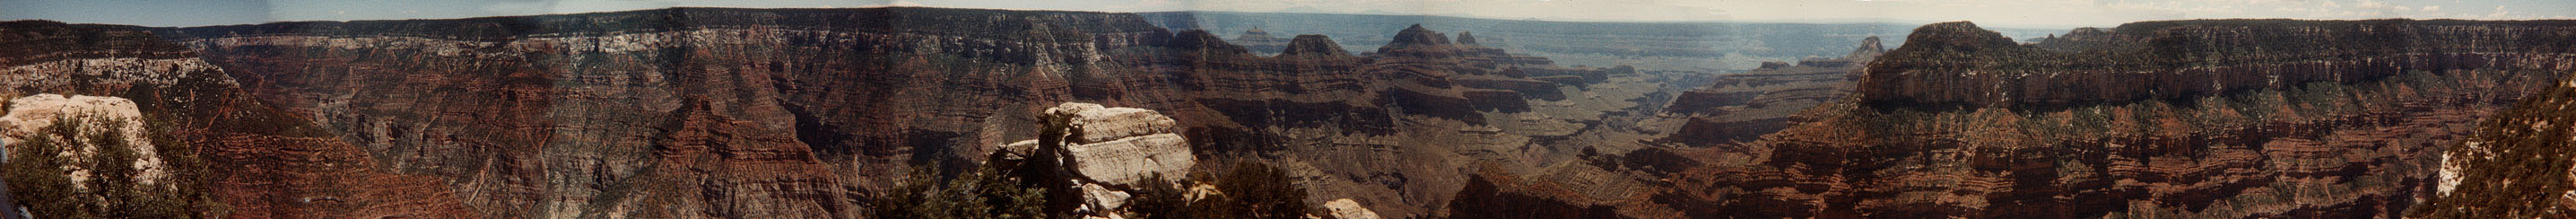 Grand Canyon north rim at Bright Angel Point